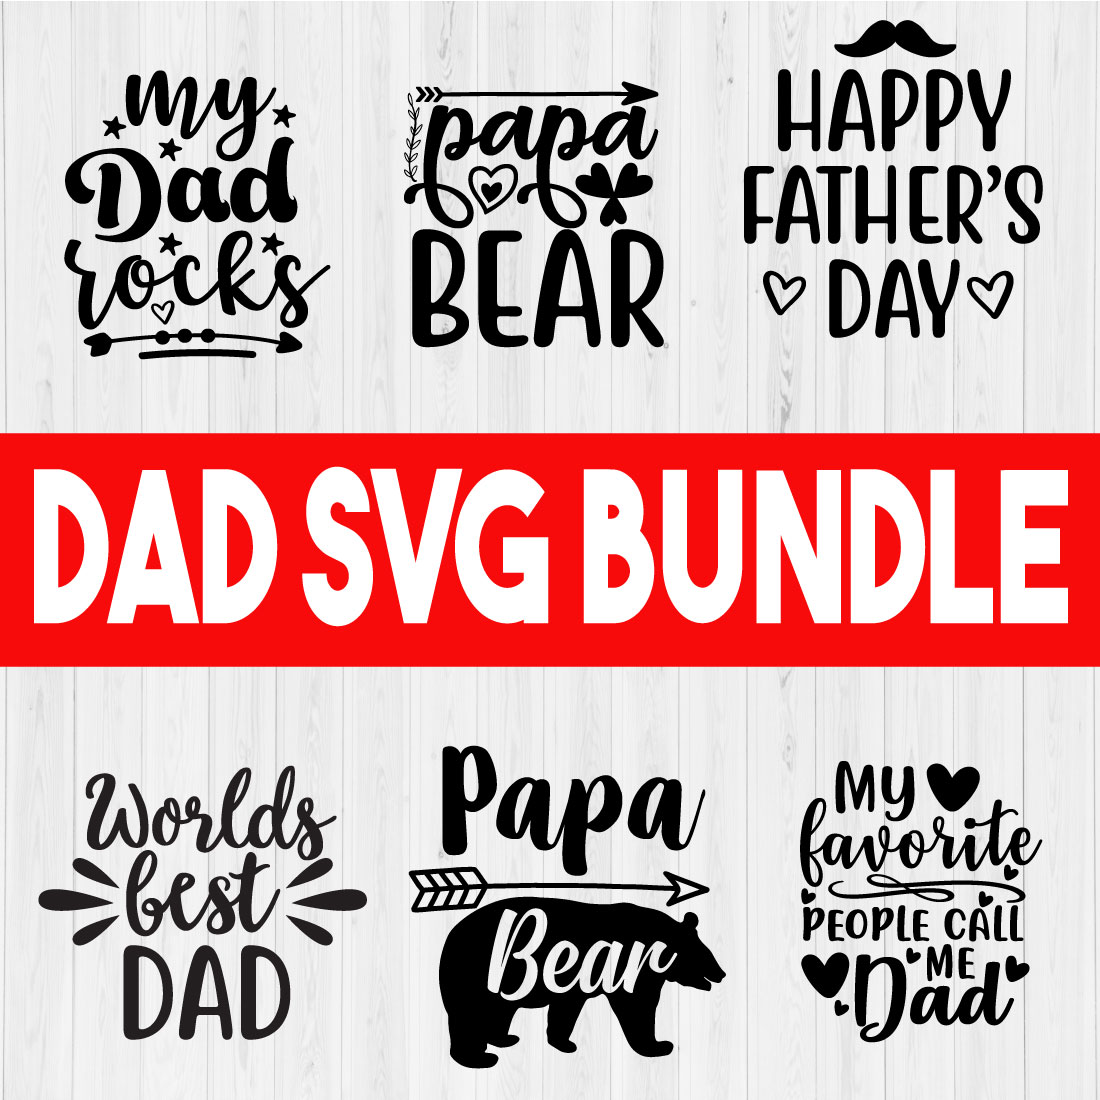 Dad Svg Bundle Vol8 cover image.